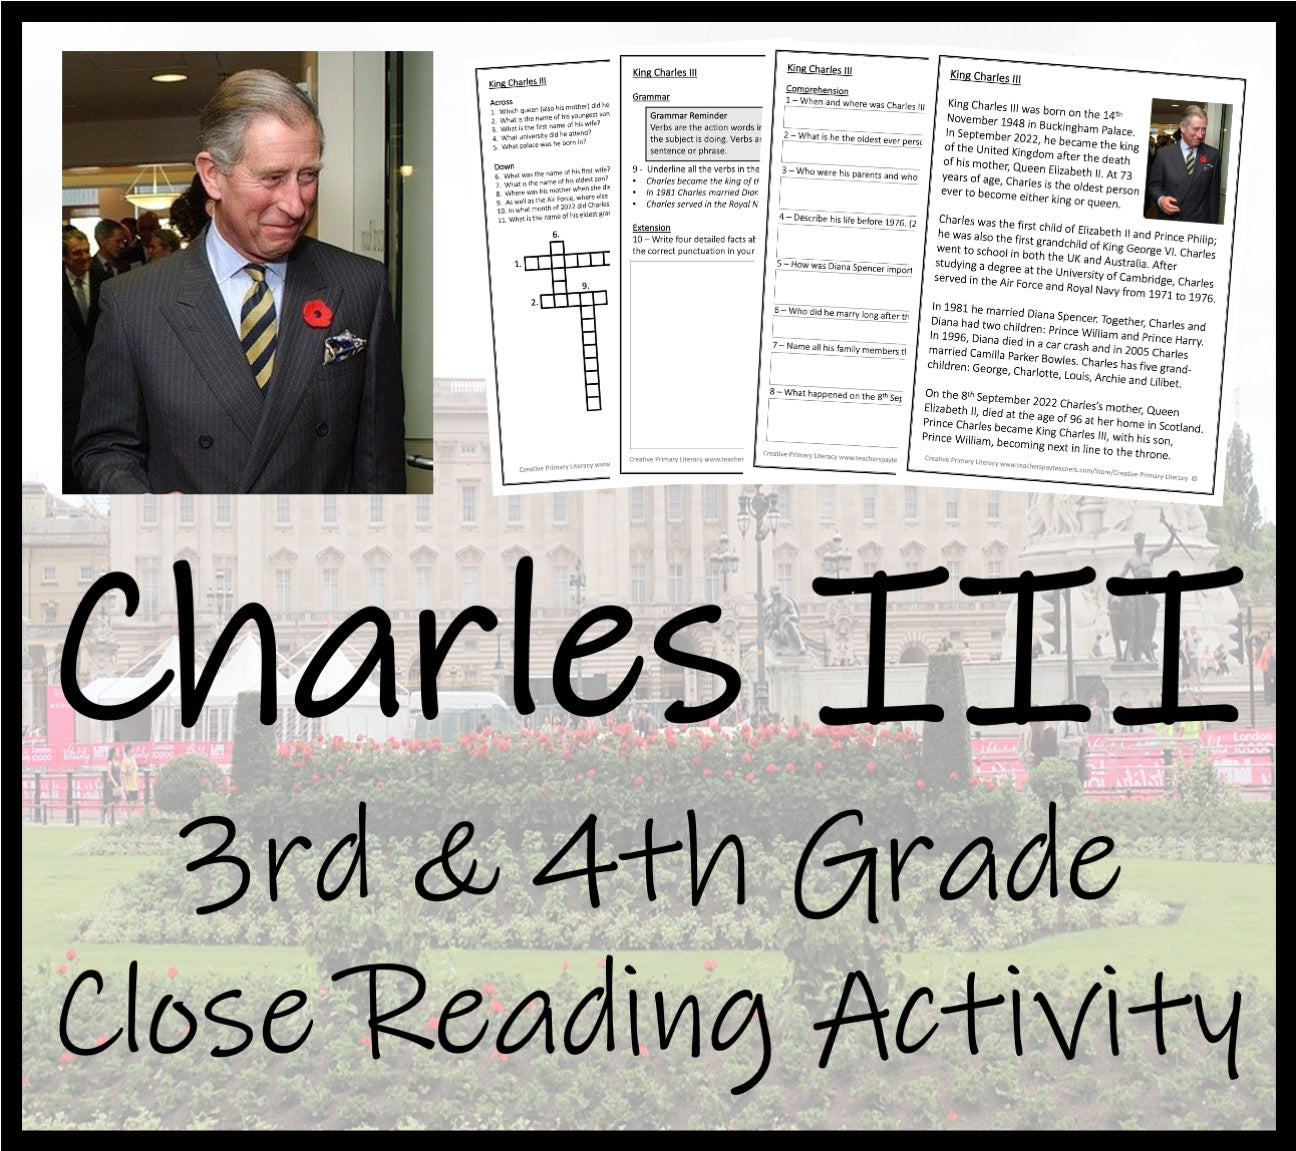 King Charles III Close Reading Comprehension Activity | 3rd Grade & 4th Grade